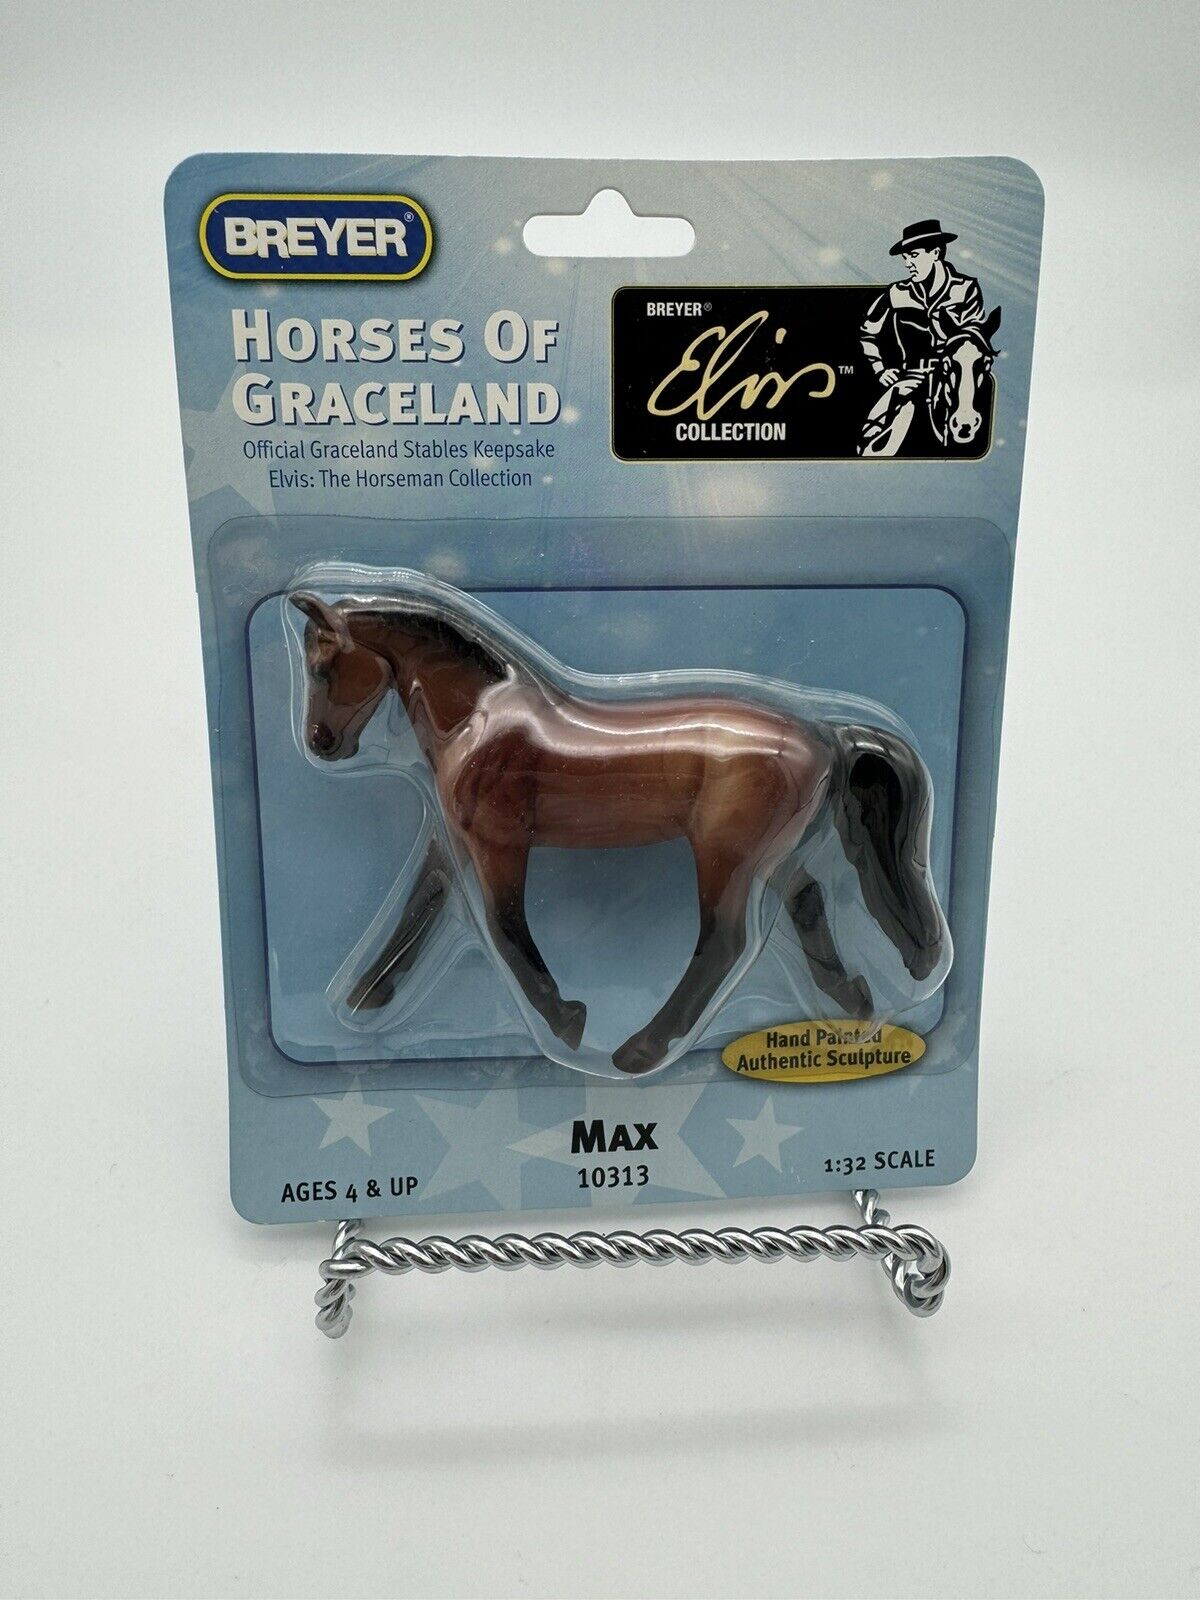 Breyer Elvis Collection Horses Of Graceland “Max” NIP